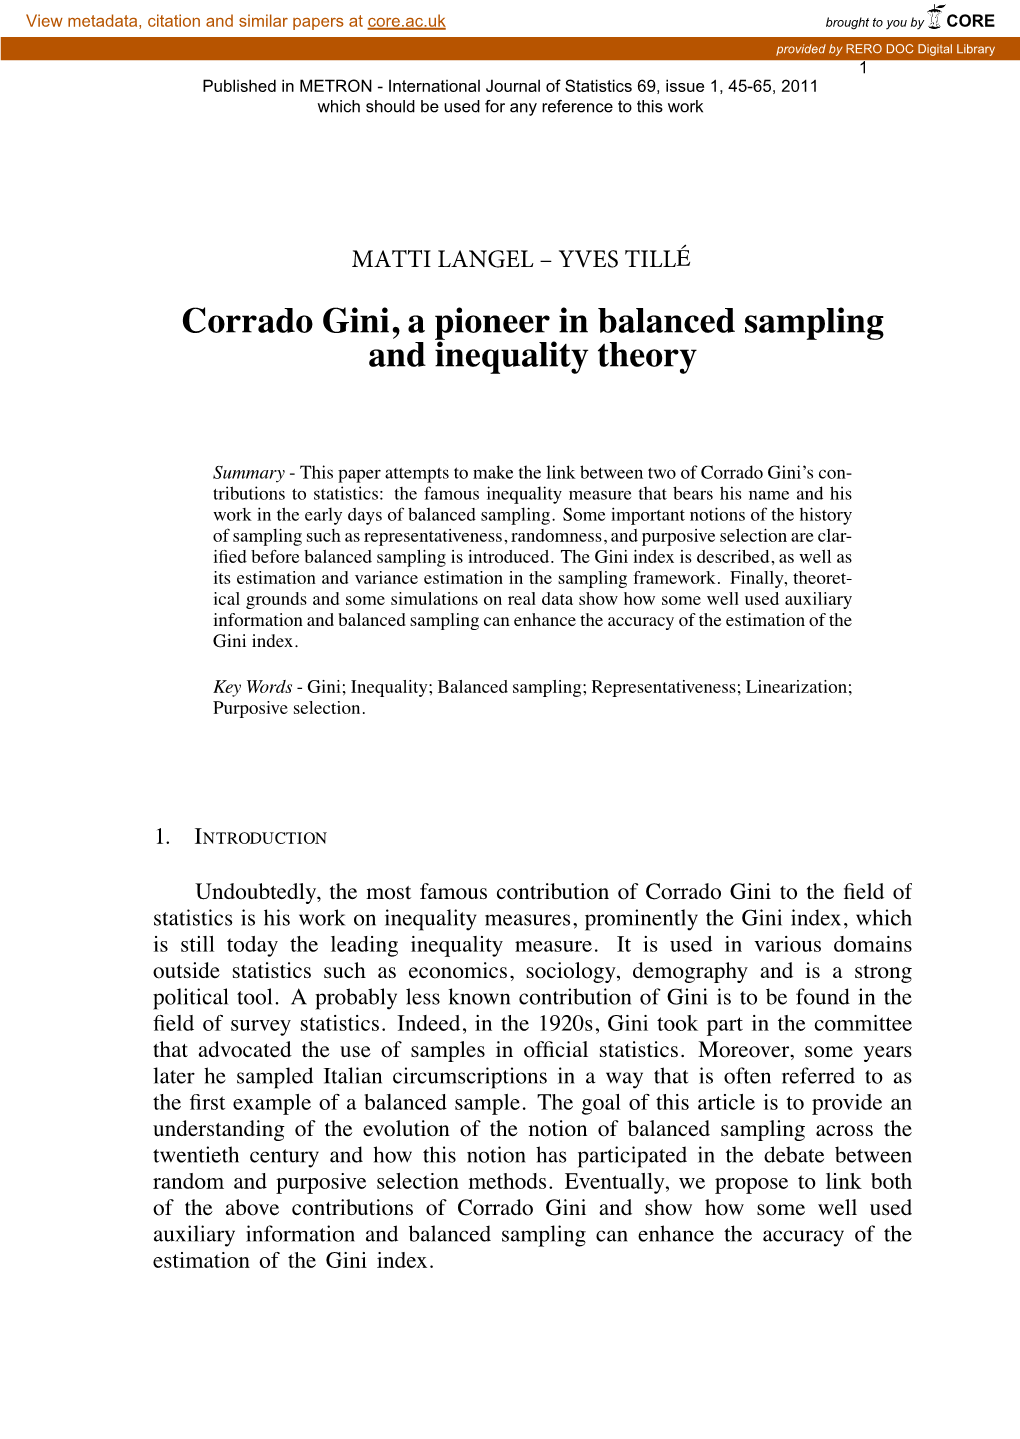 Corrado Gini, a Pioneer in Balanced Sampling and Inequality Theory